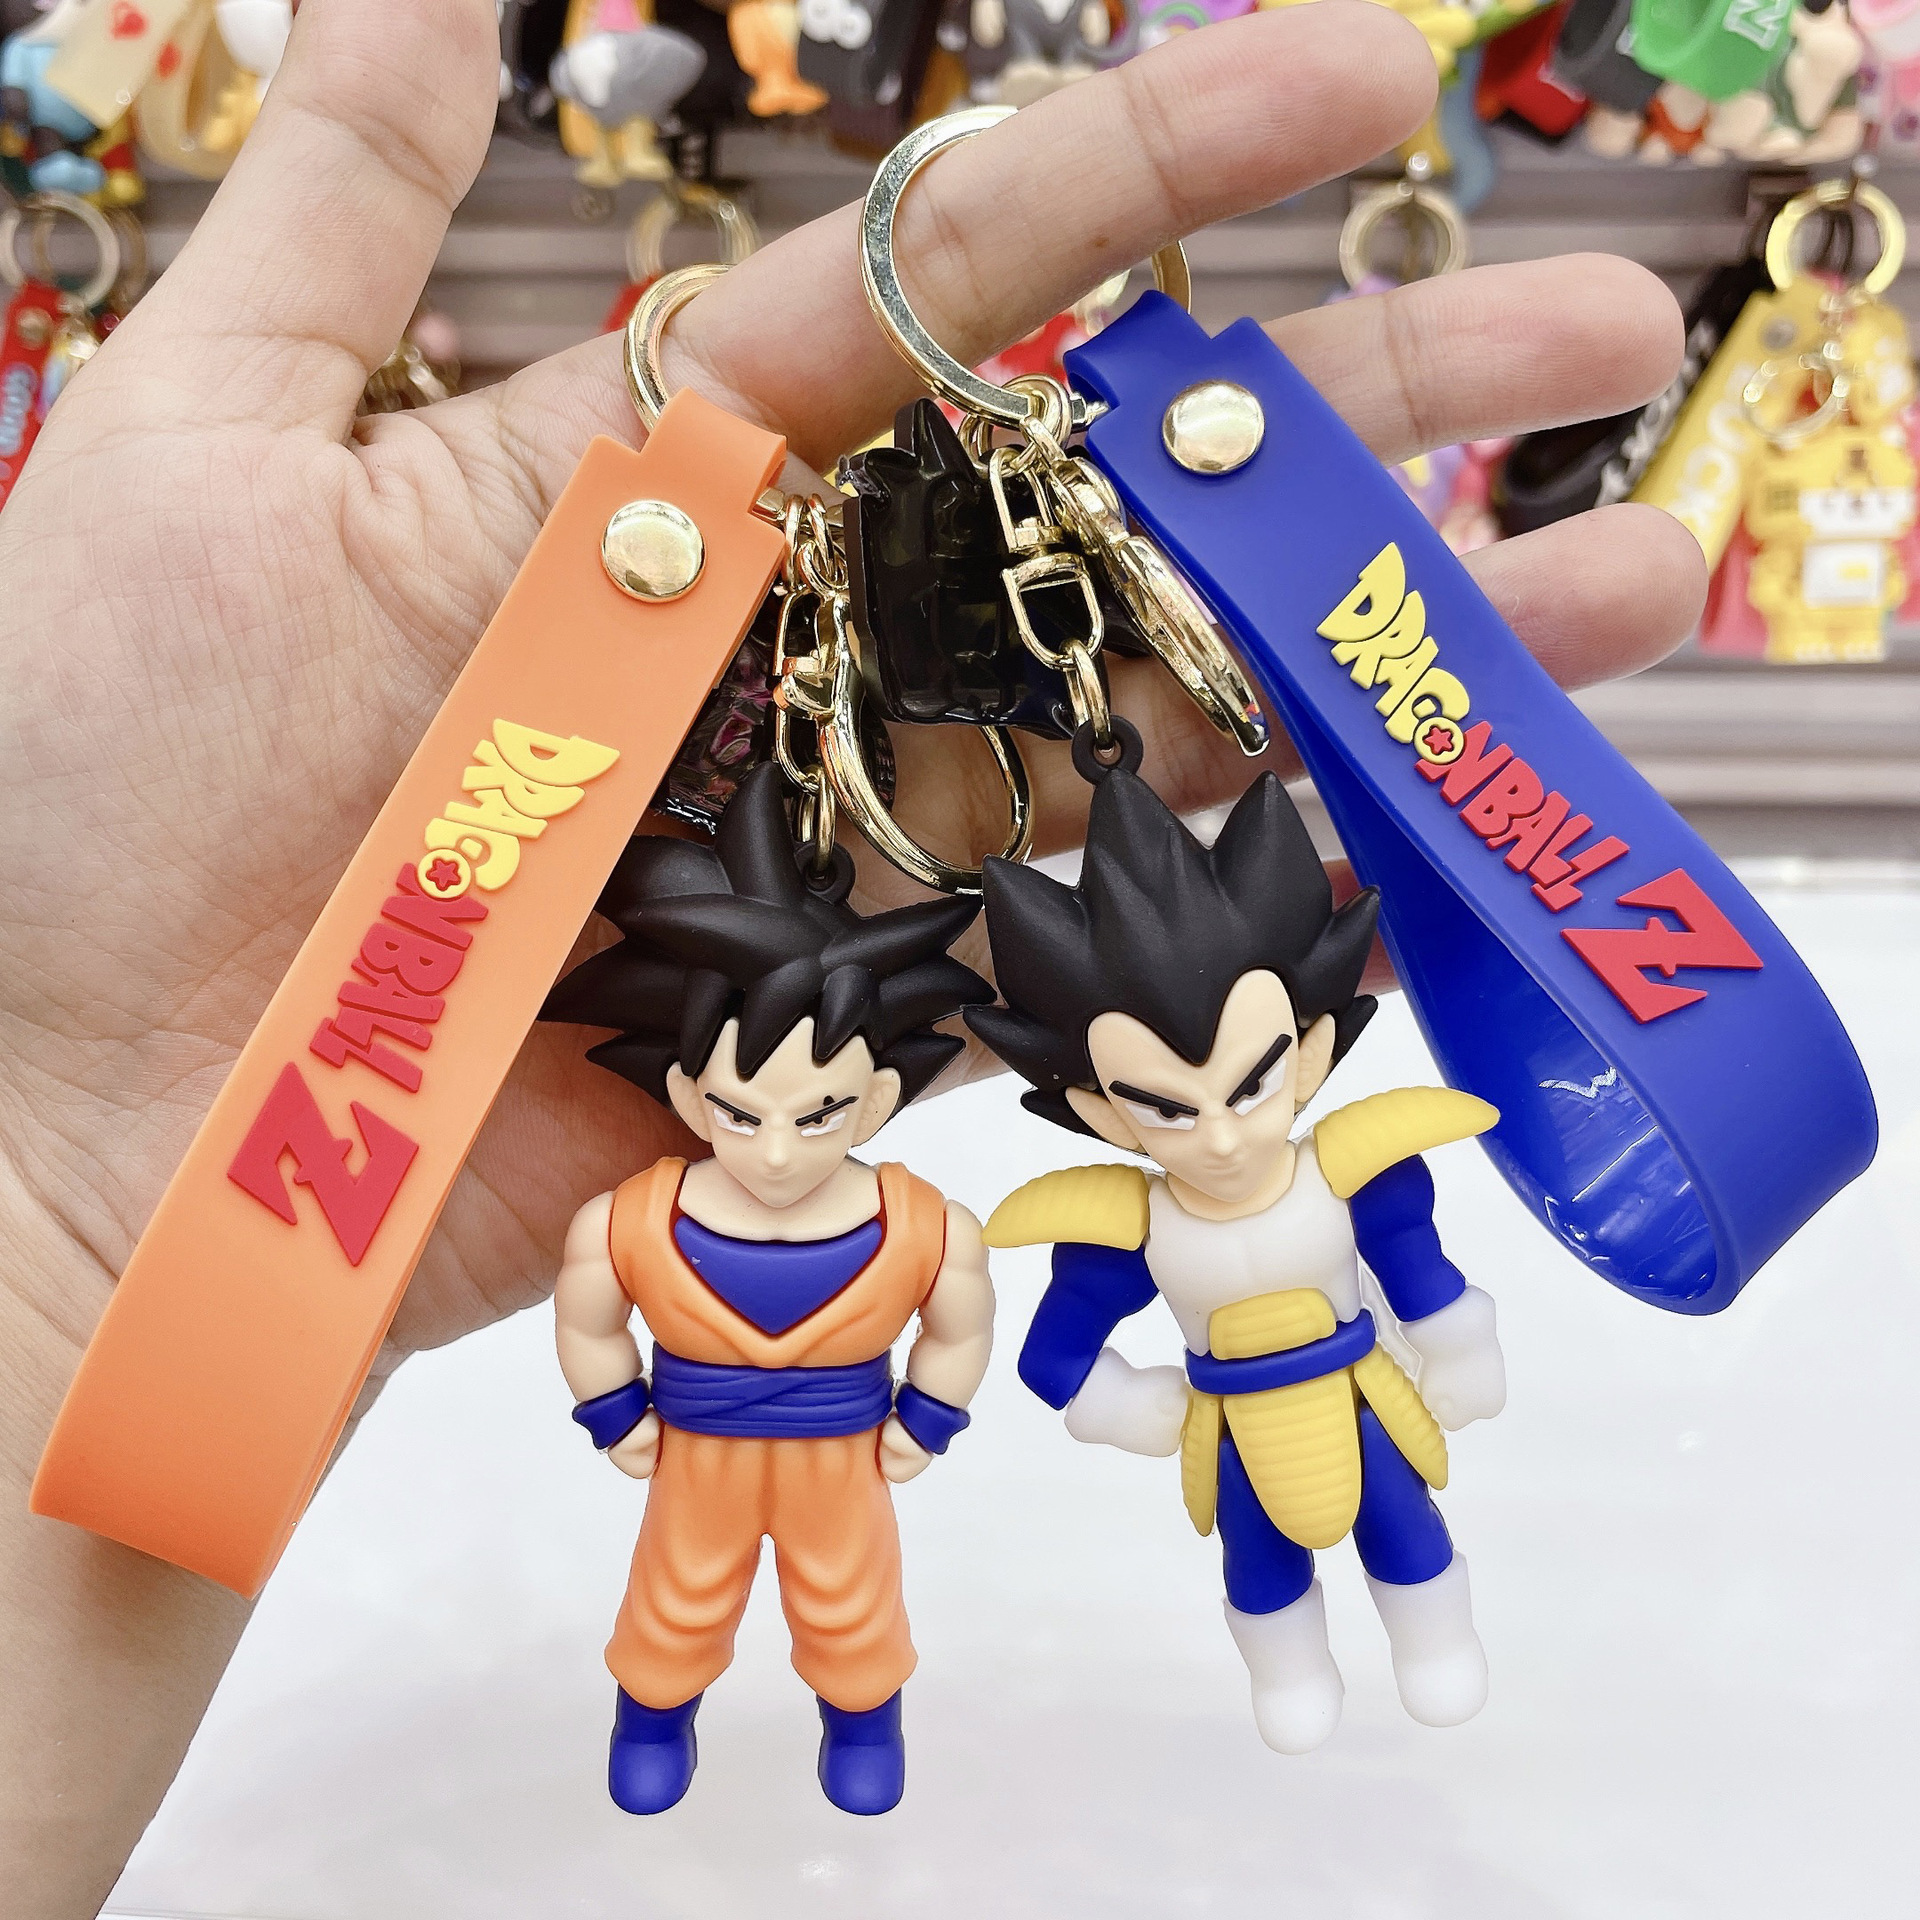 New Dragon Ball Saiyan Doll Keychain Pendant Creative Monkey King Cars and Bags Small Ornaments Wholesale